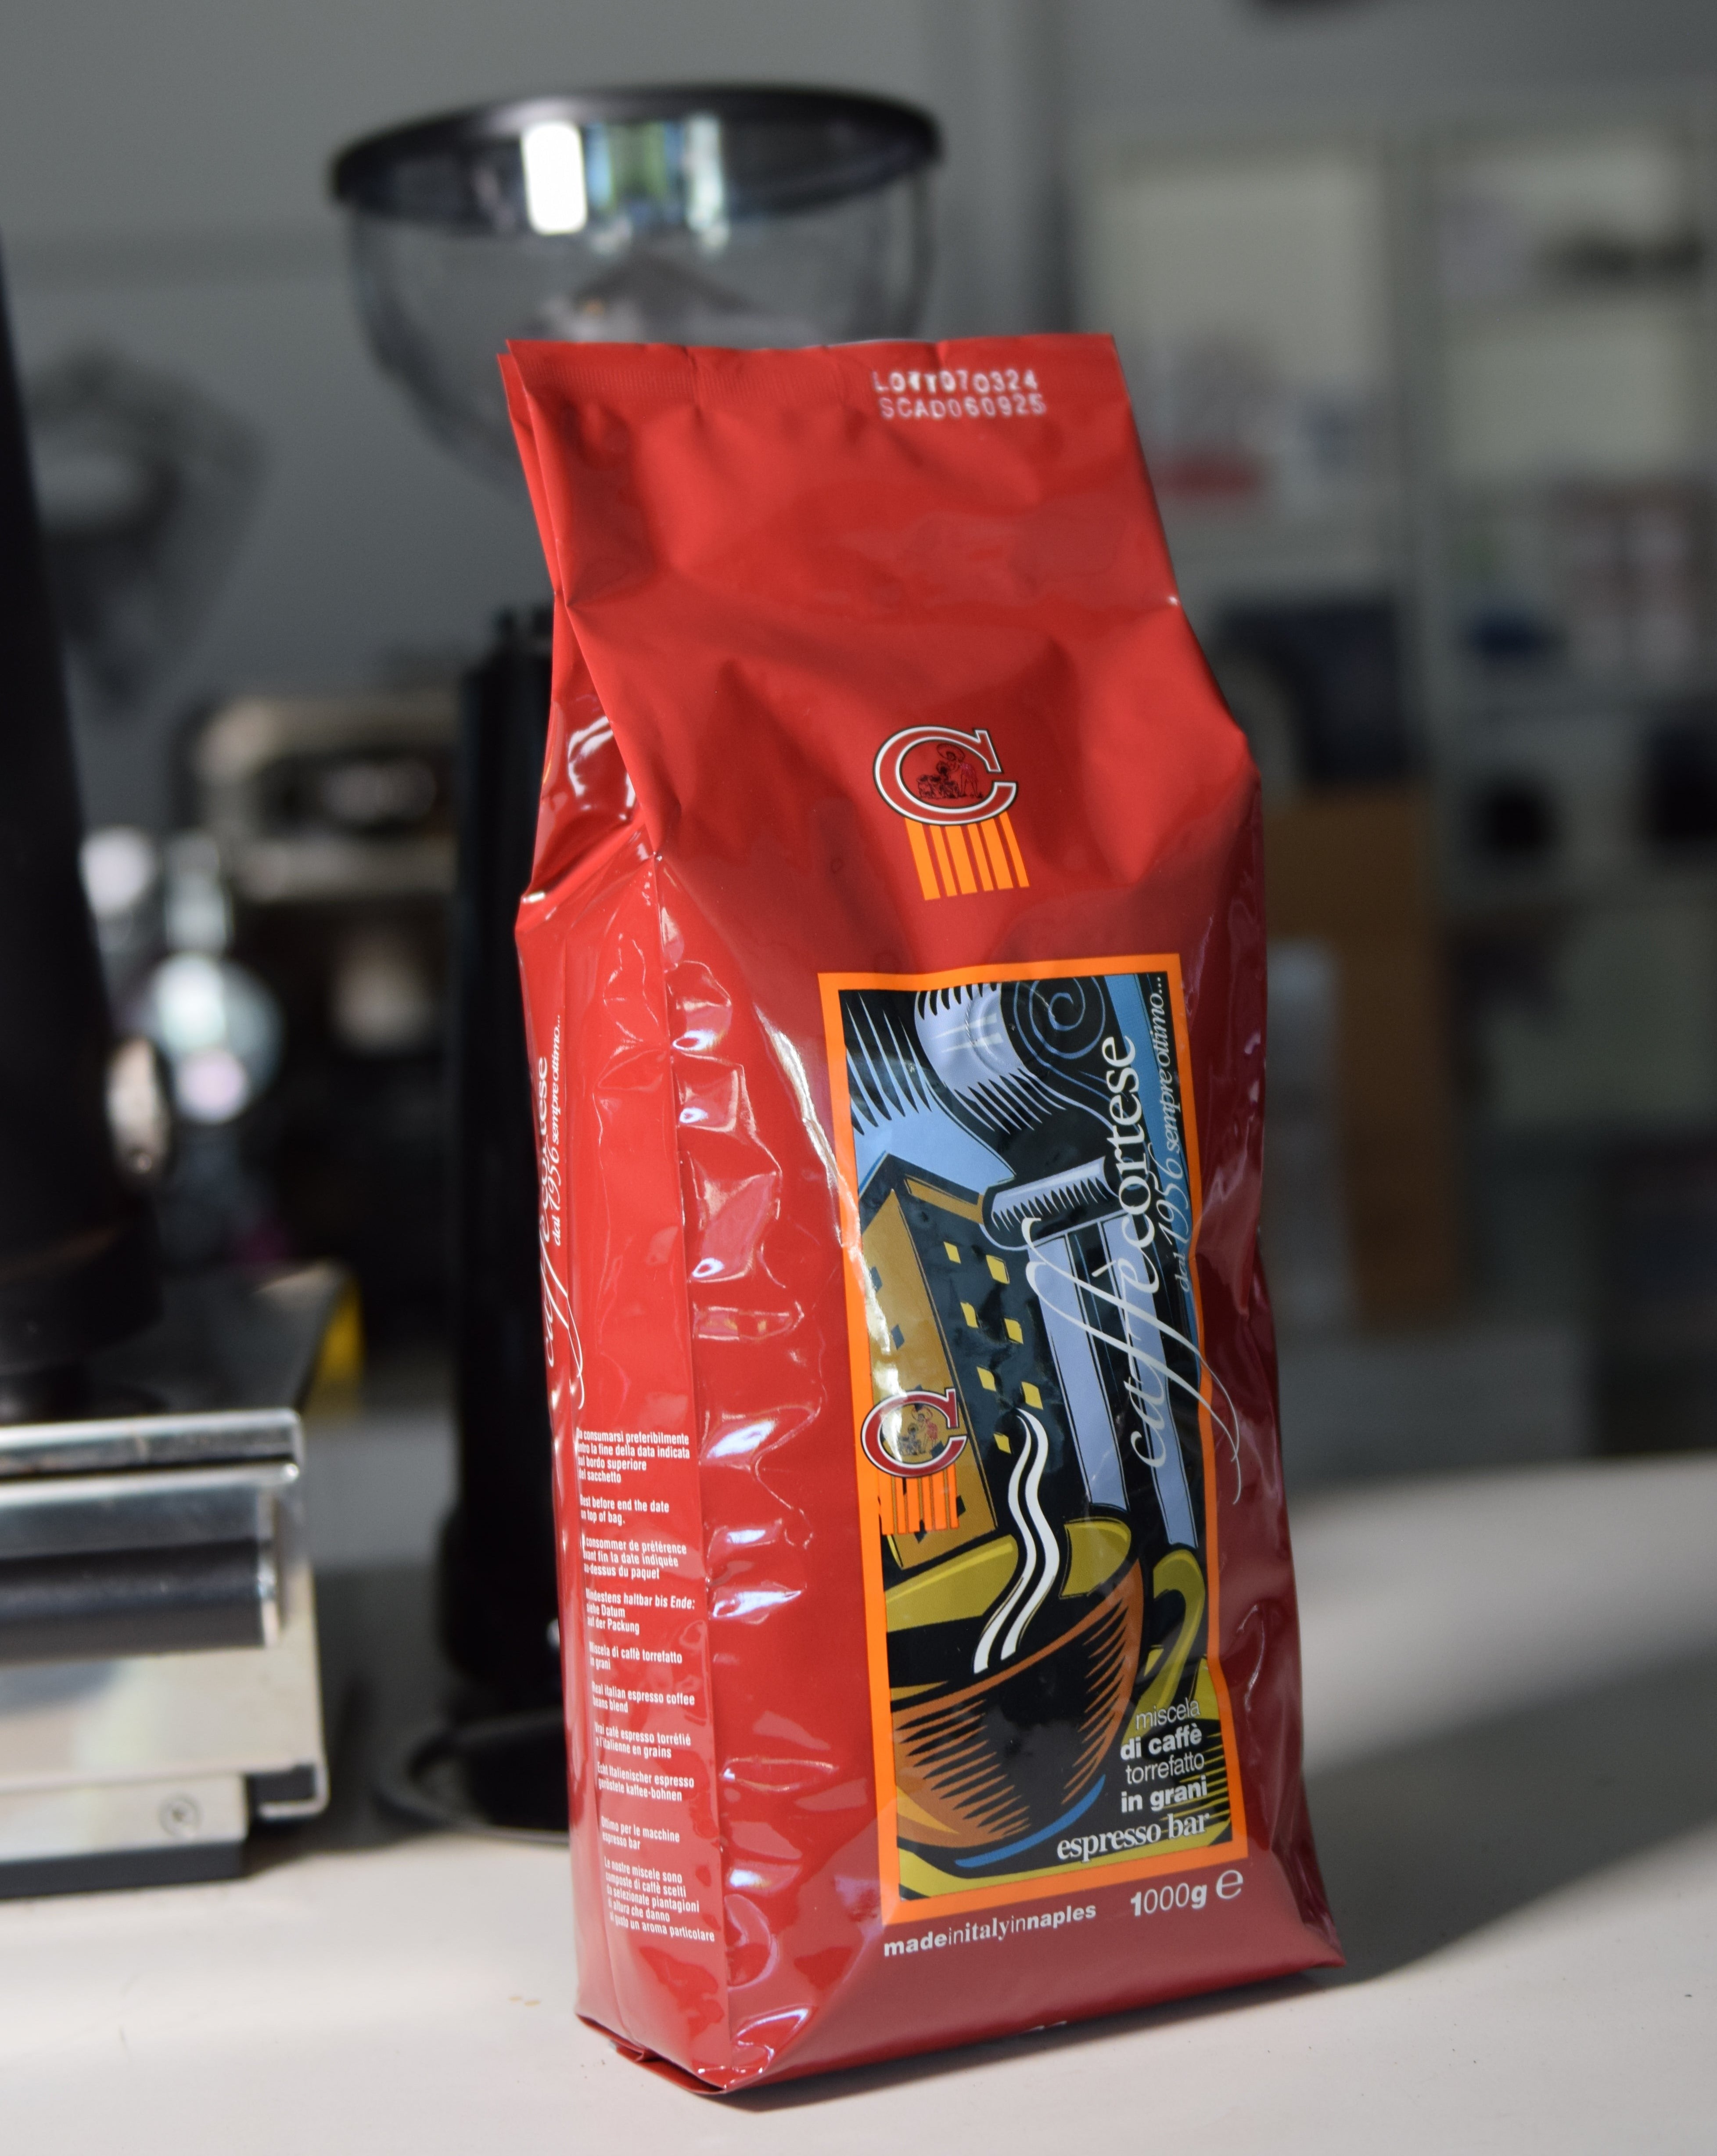 Caffe Cortese - Coffee 1Kg (Red bag)